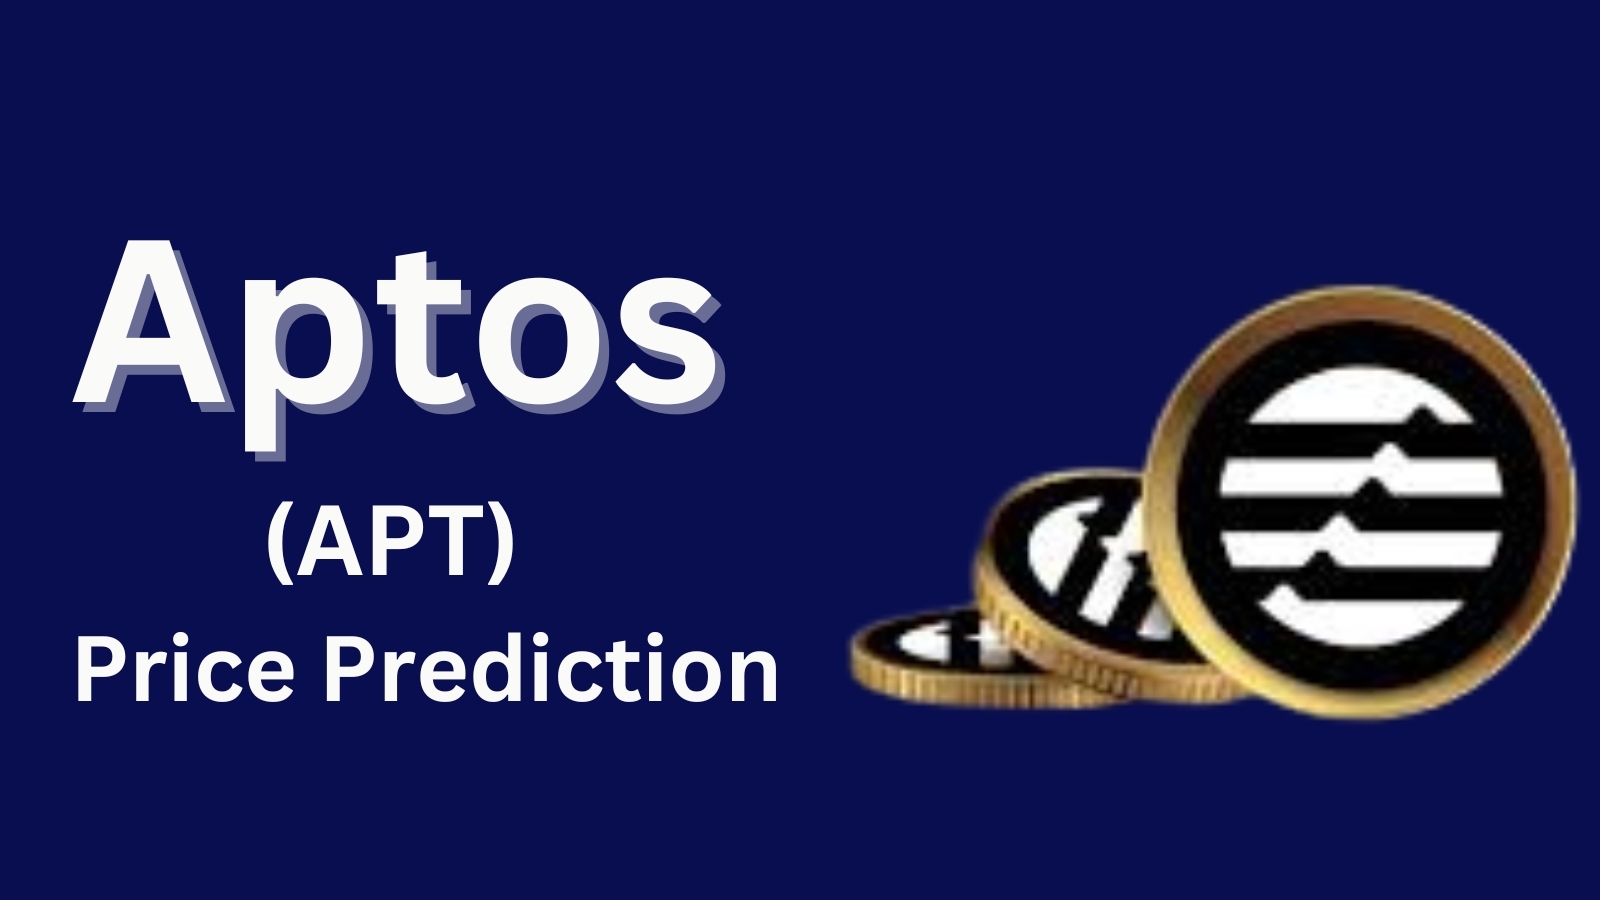 Aptos (APT) Price Prediction